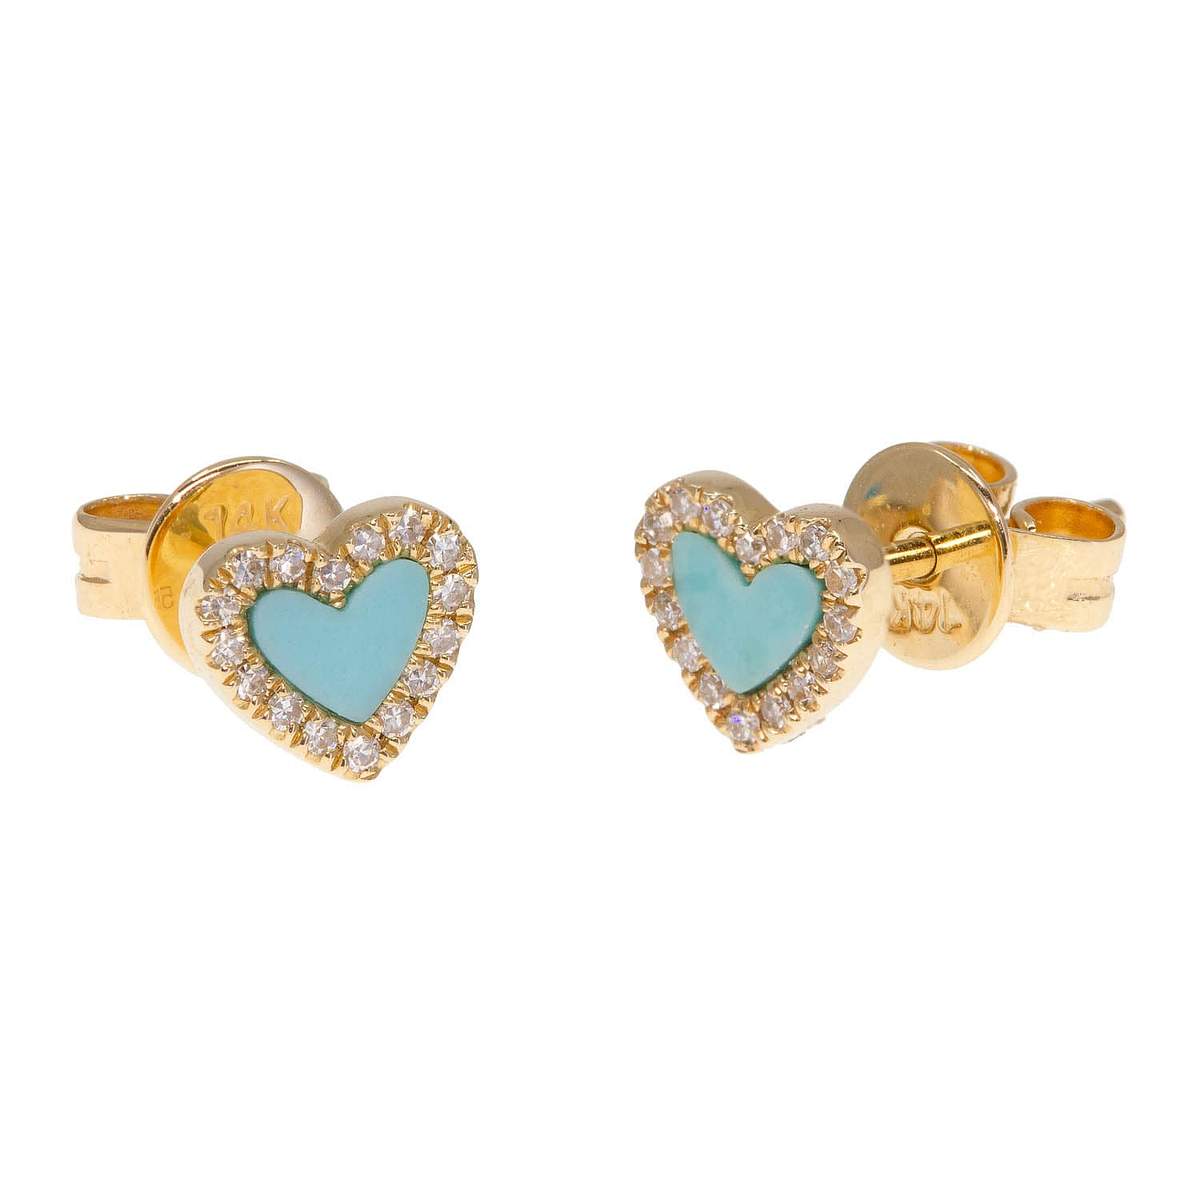 Dolly Turquoise & Diamond Earrings (14k Gold)